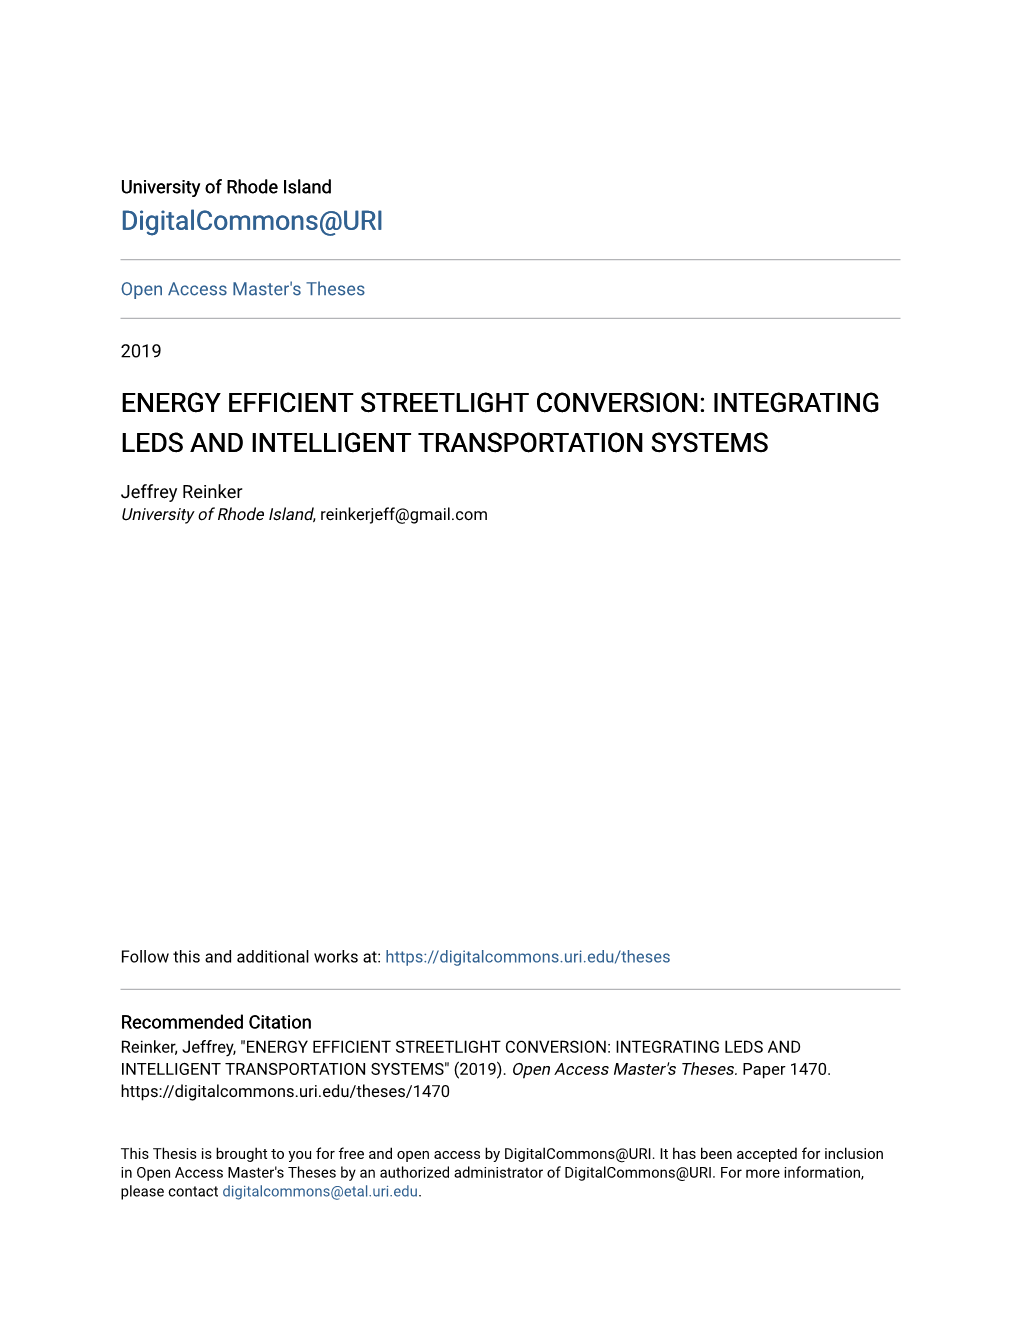 Energy Efficient Streetlight Conversion: Integrating Leds and Intelligent Transportation Systems